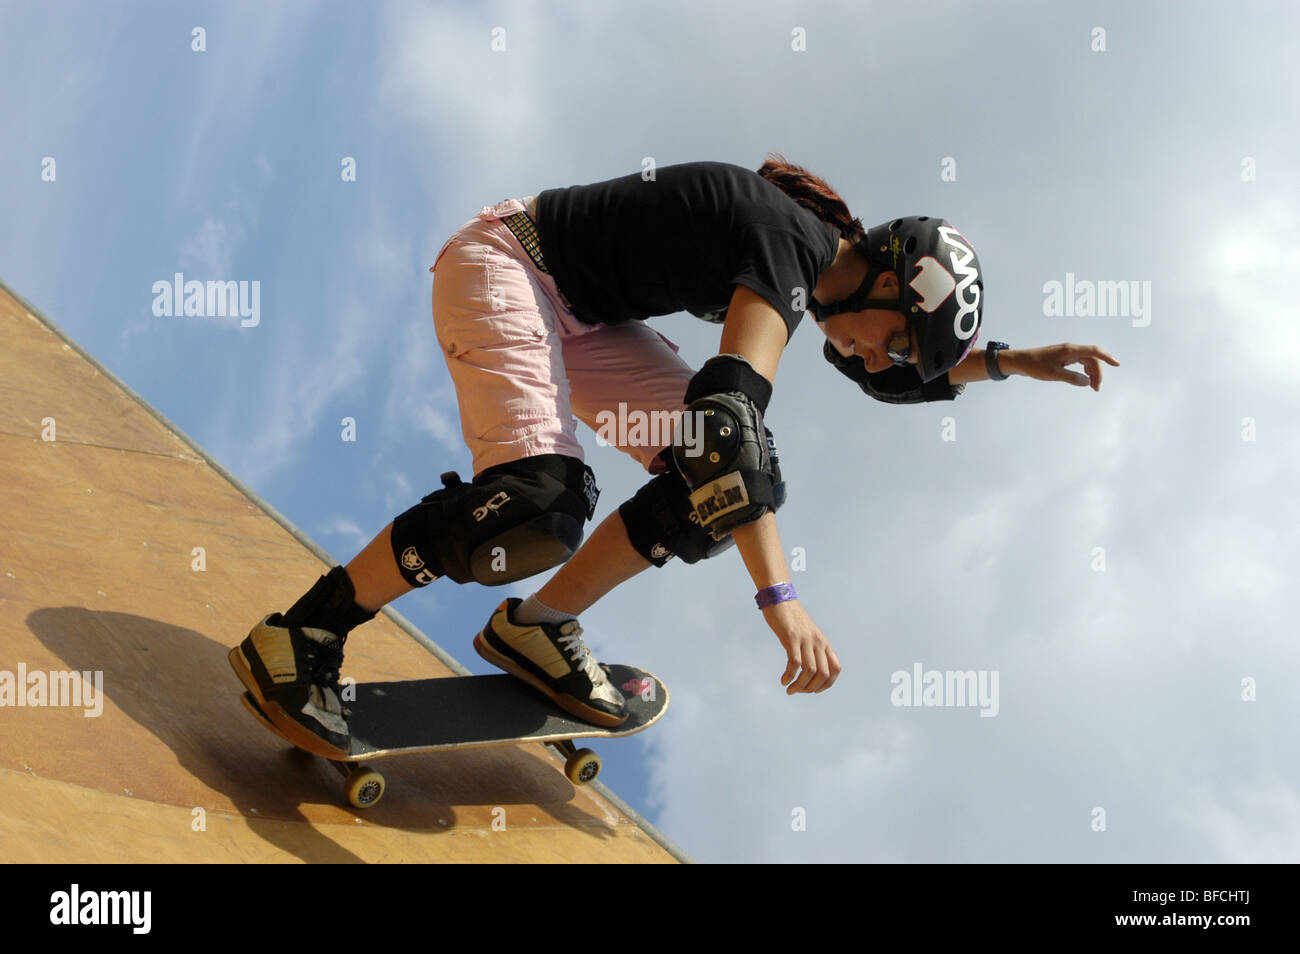 Skate board riders Stock Photo